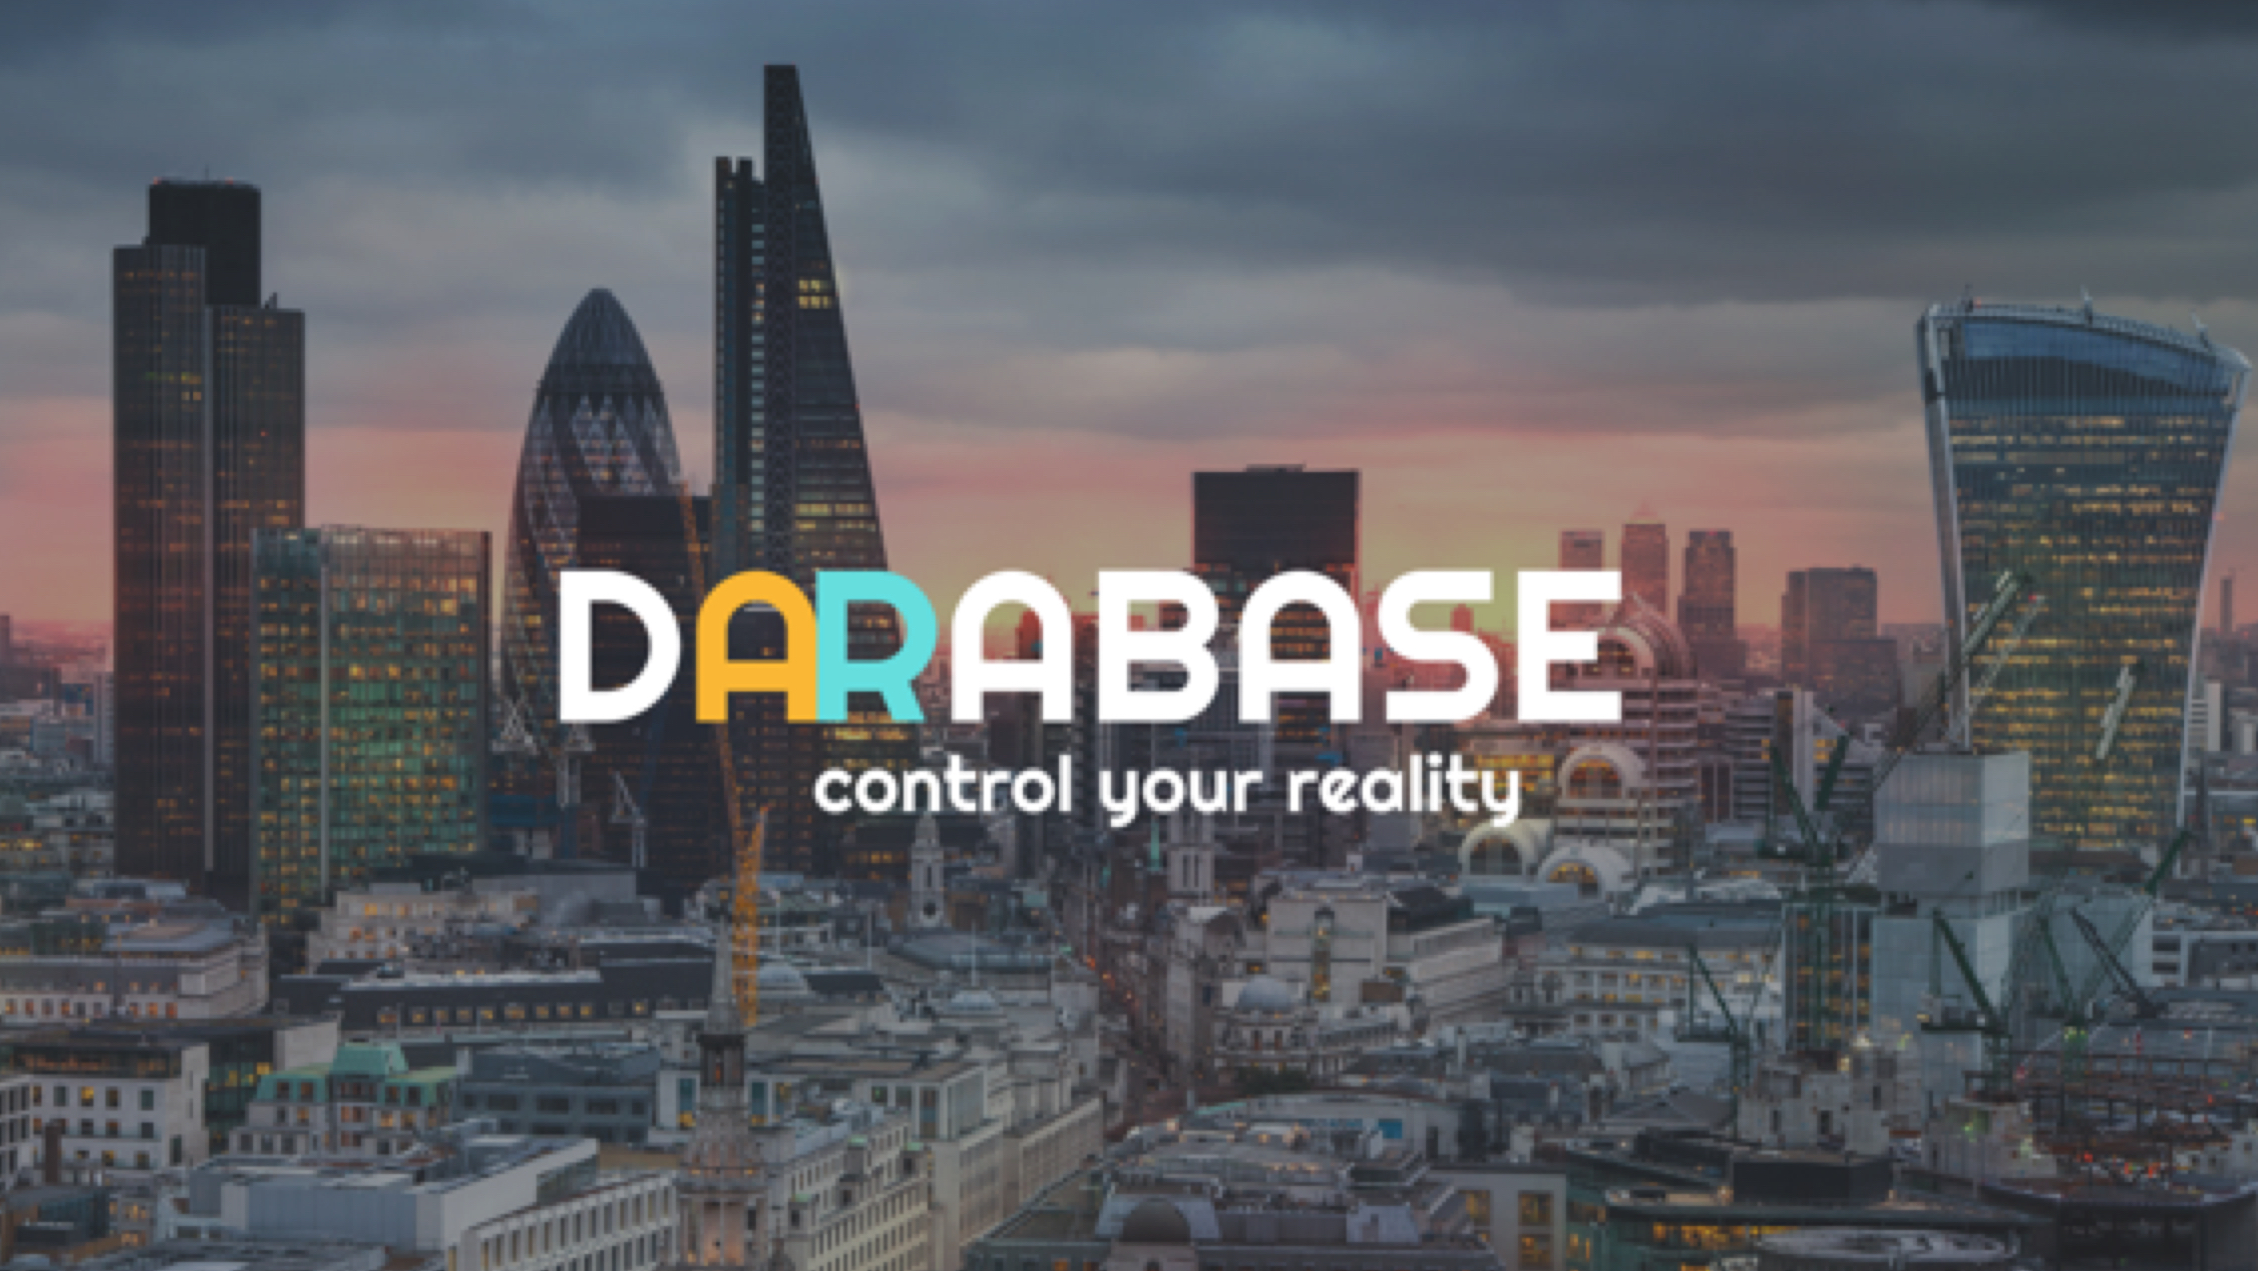 The case for Darabase